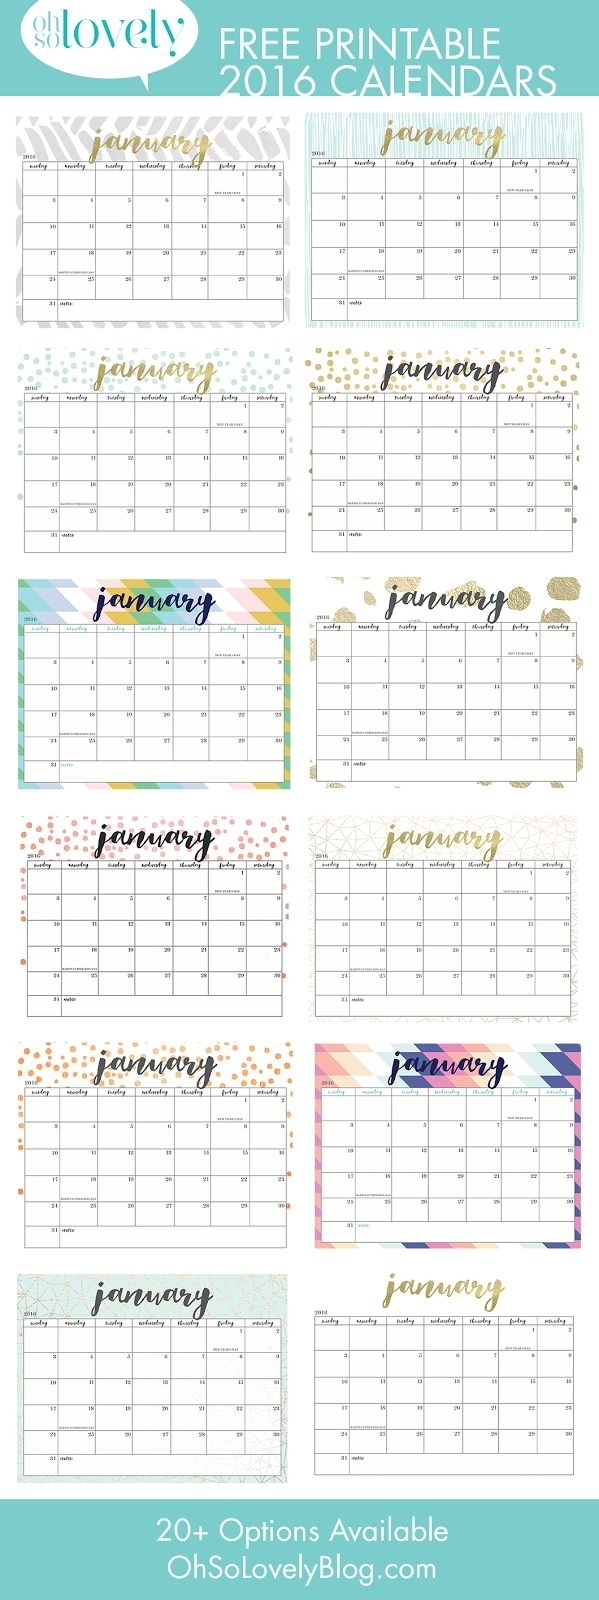 16 Free 2016 Printable Calendar